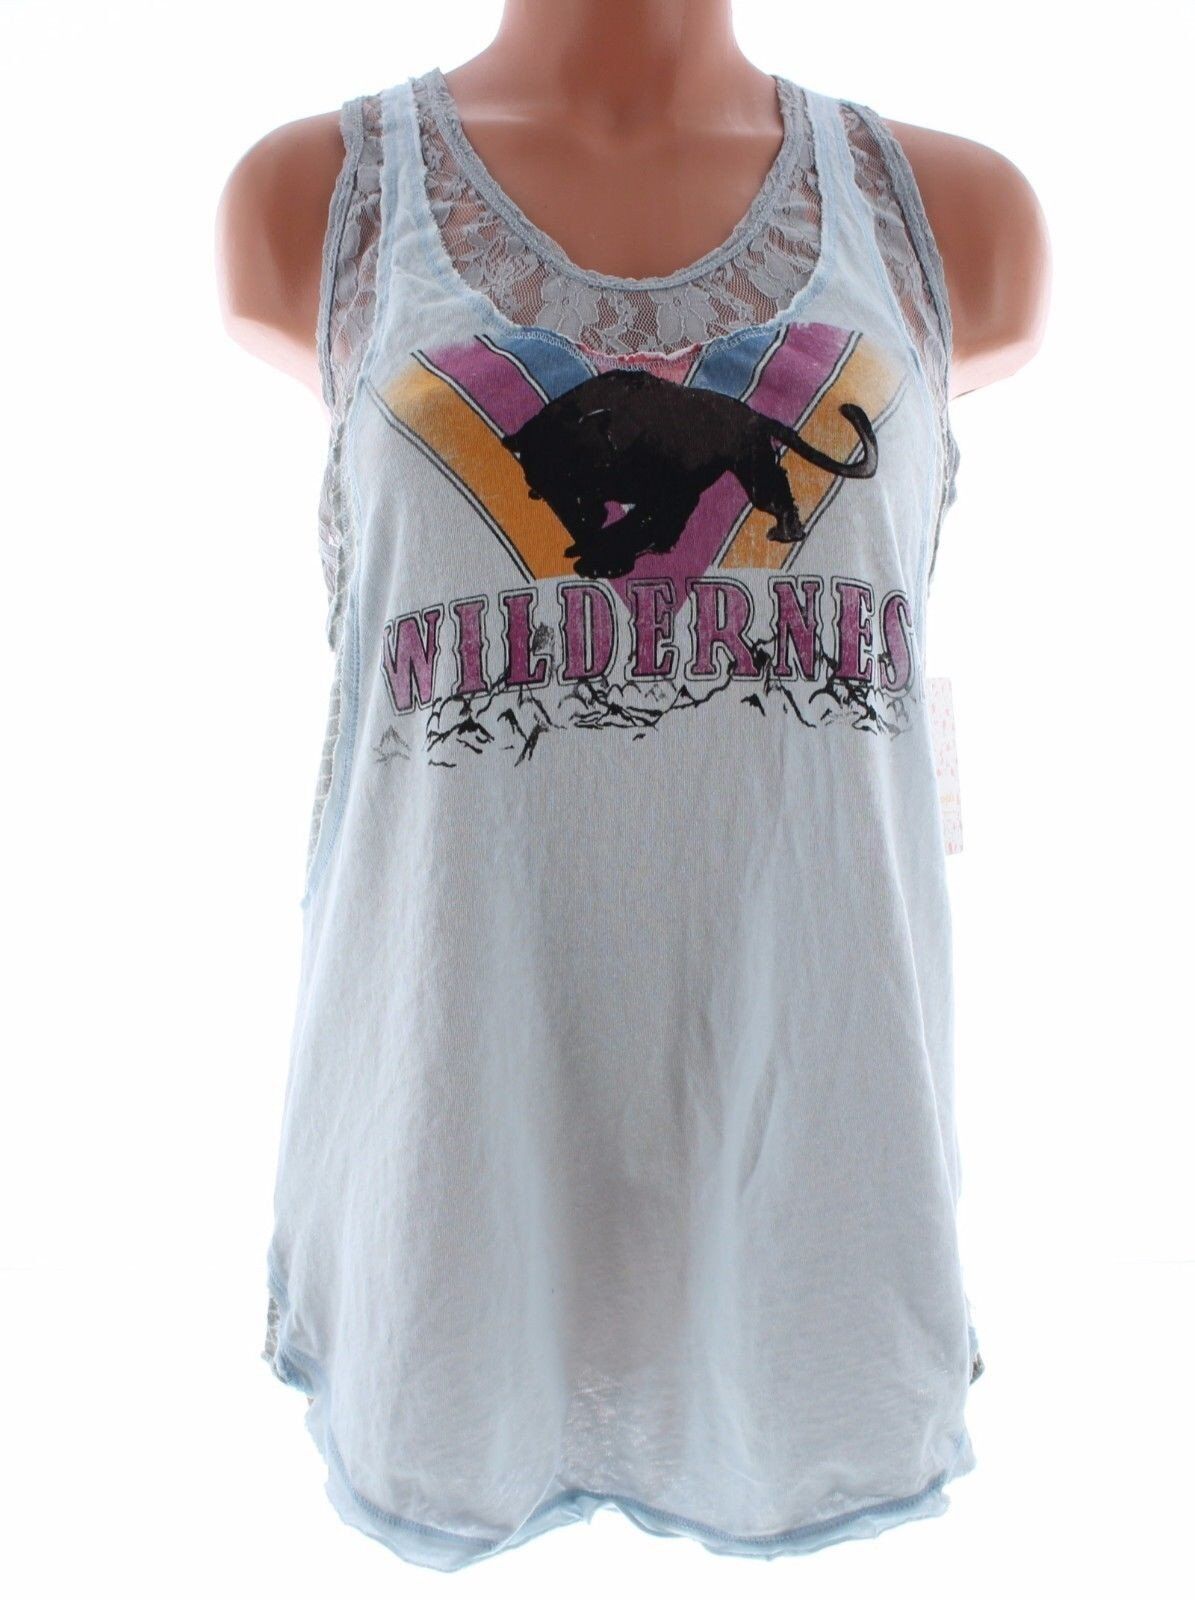 Free People Tank Top Women's Lace Trim Graphic Sleeveless Shirt, $78